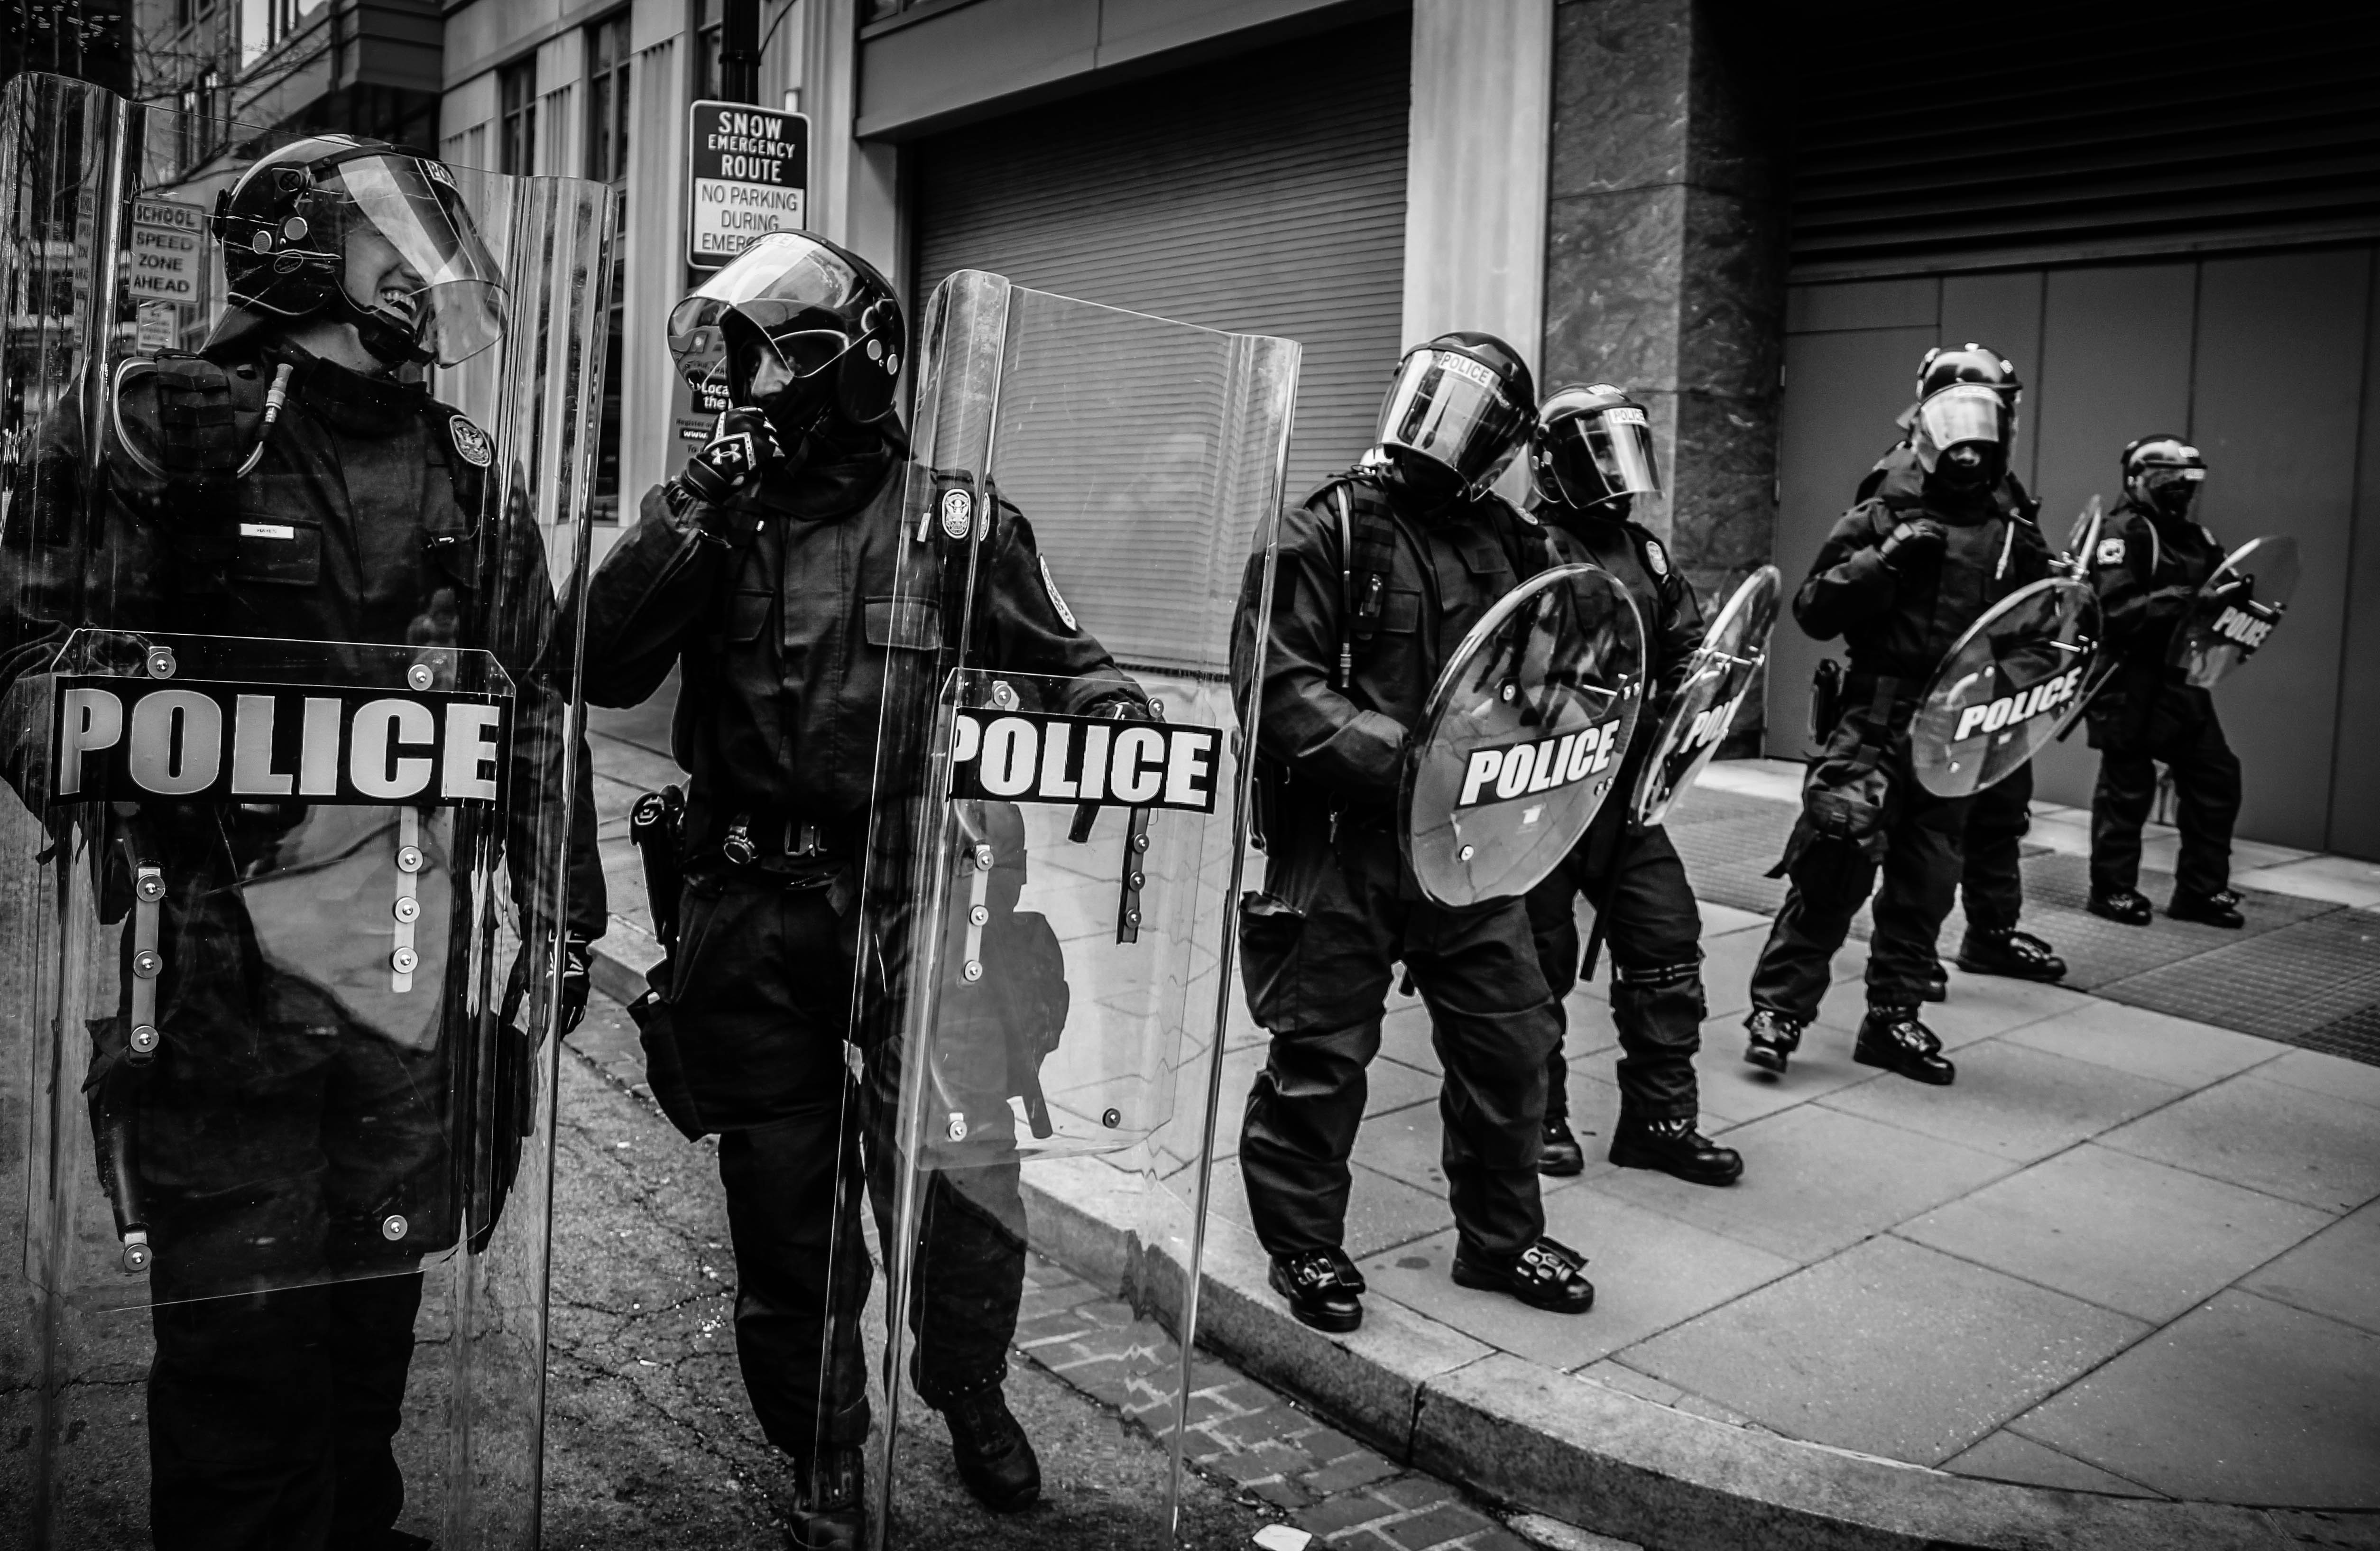 Police in riot gear; image by Spenser H, via Unsplash.com.